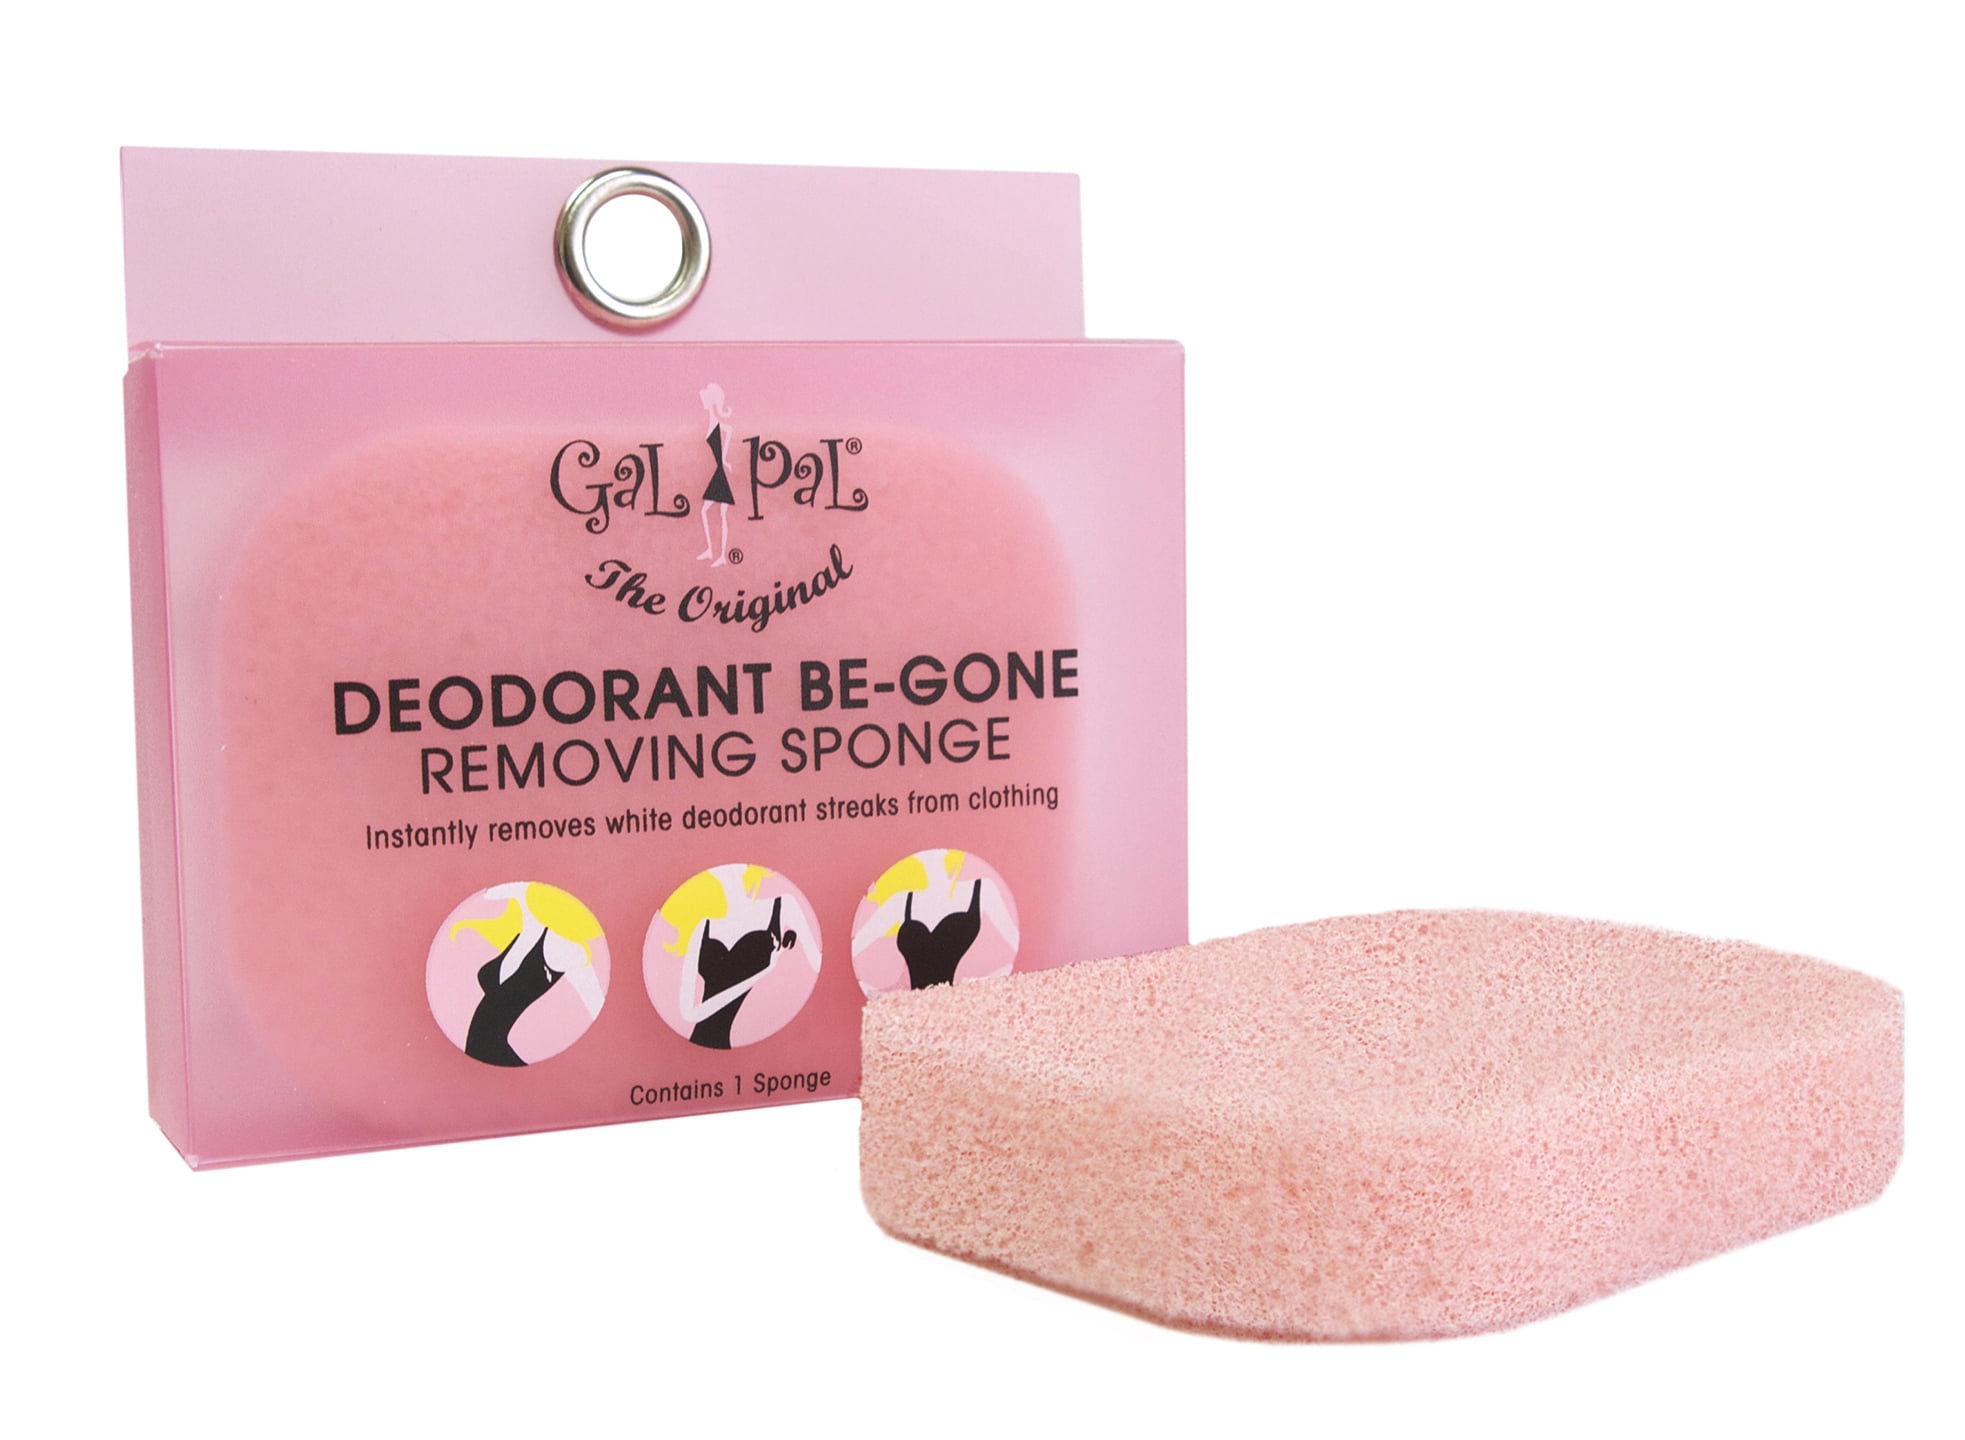 Gal Pal Deodorant Be Gone Remover Sponge - Walmart.com - Walmart.com